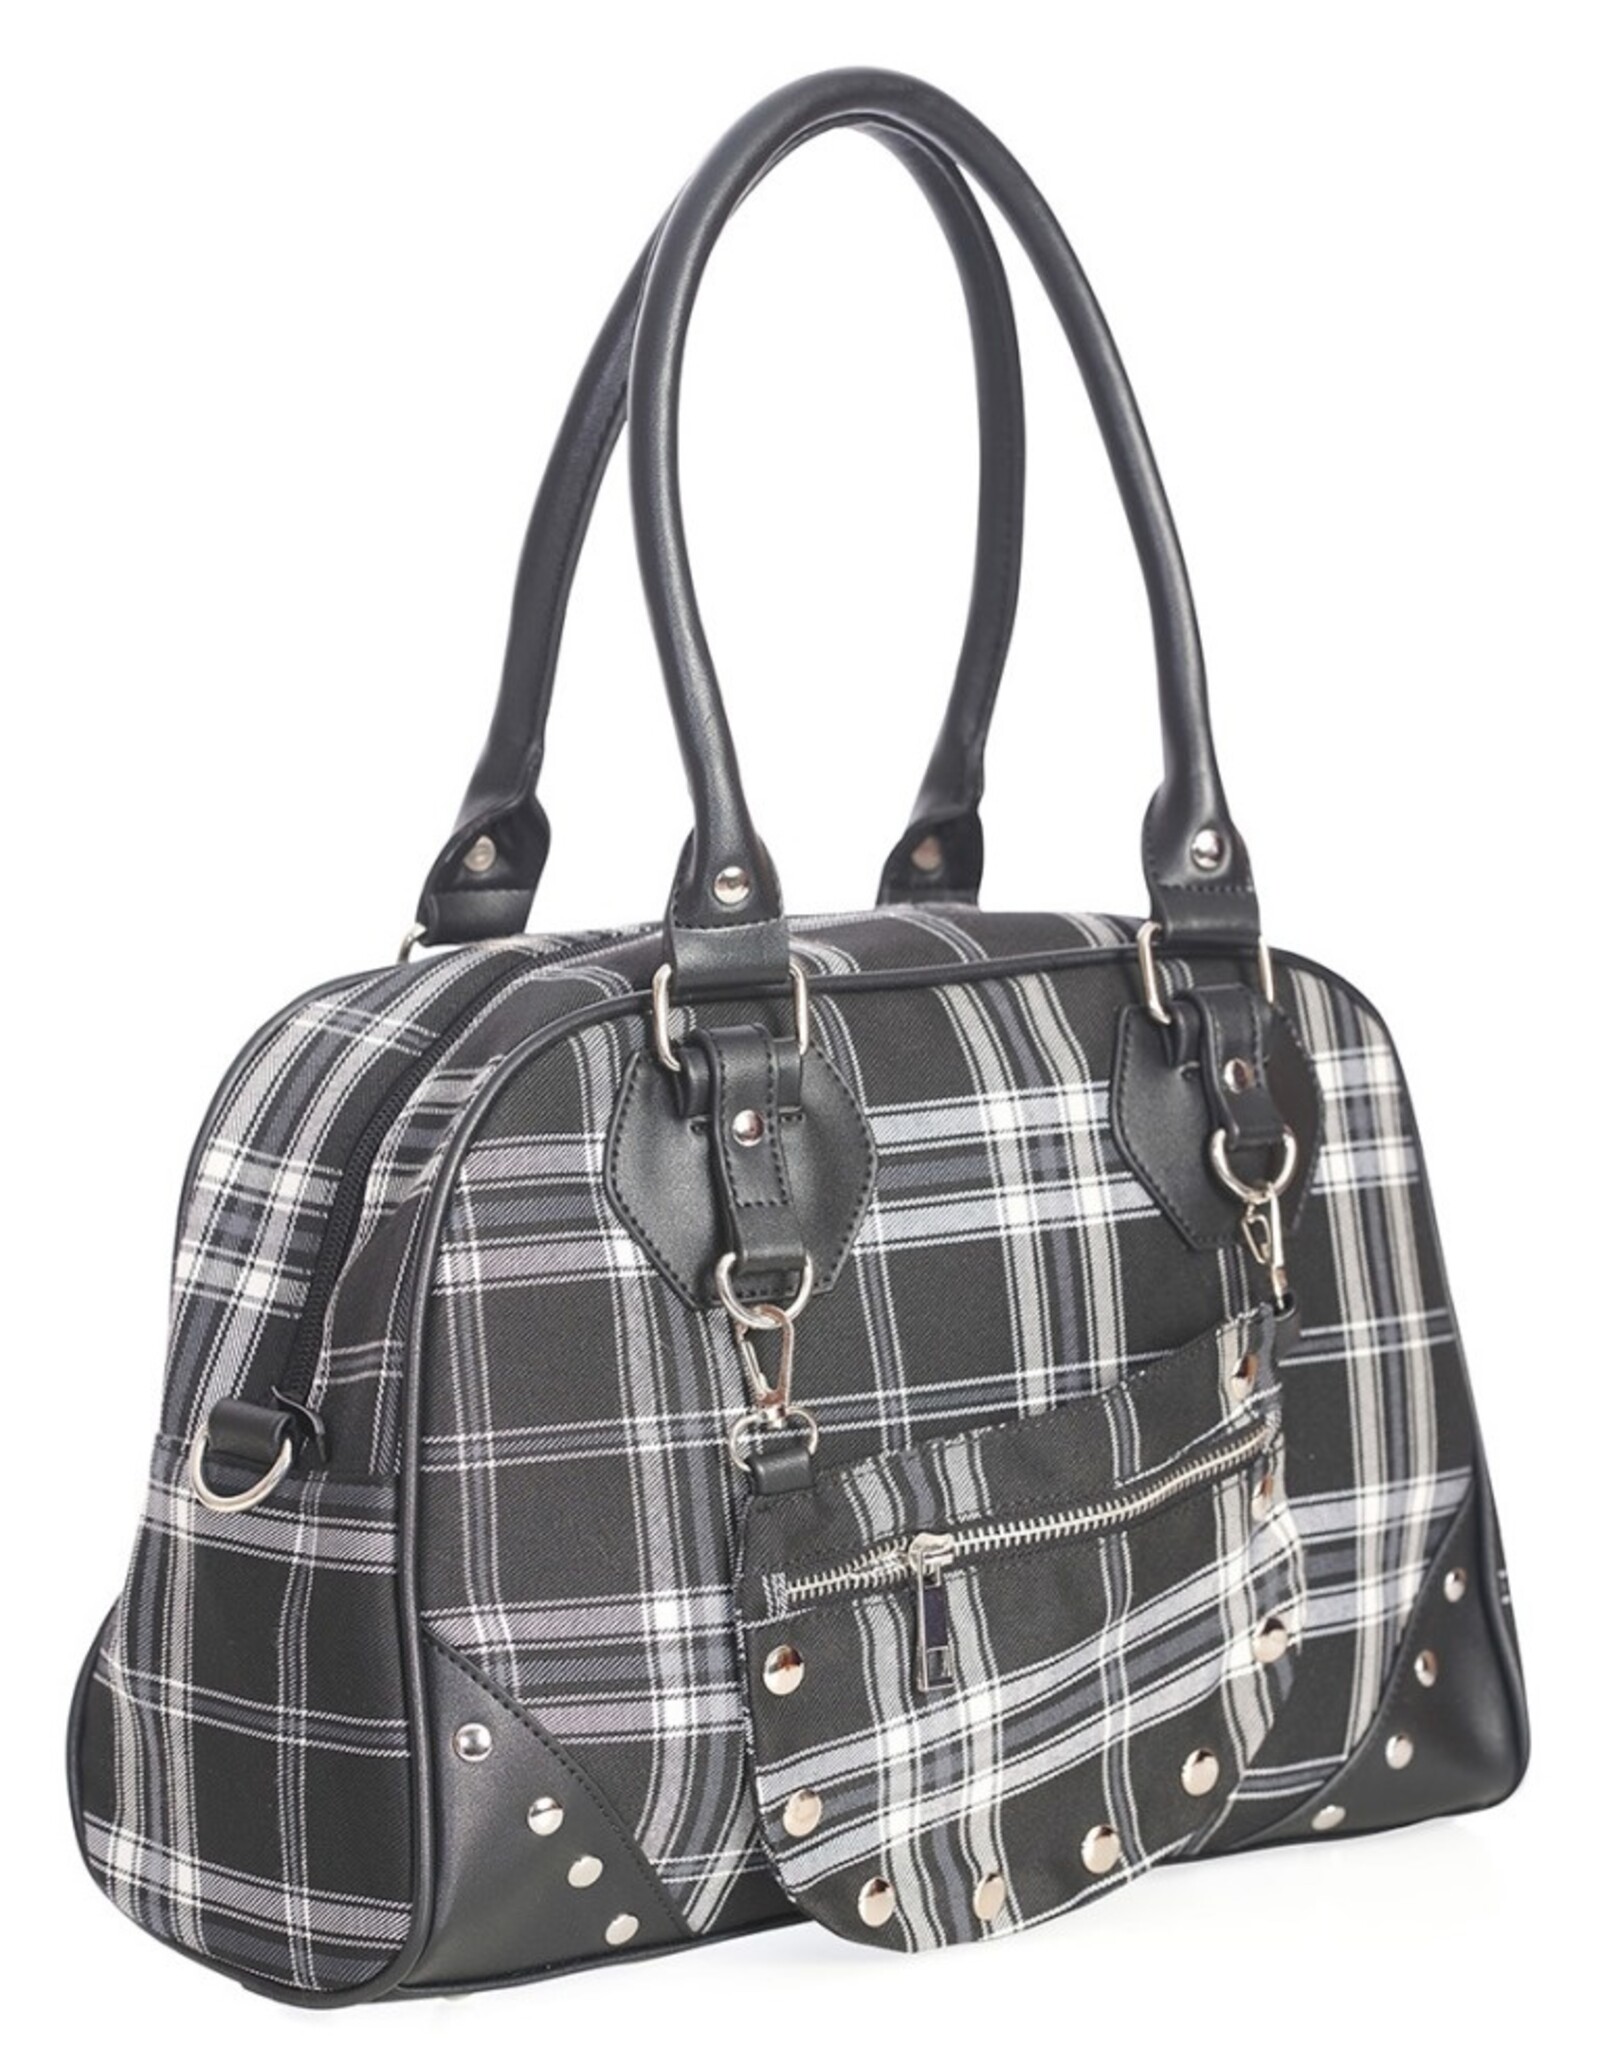 Banned Gothic bags Steampunk bags - Banned Warren Plaid Handbag black-grey